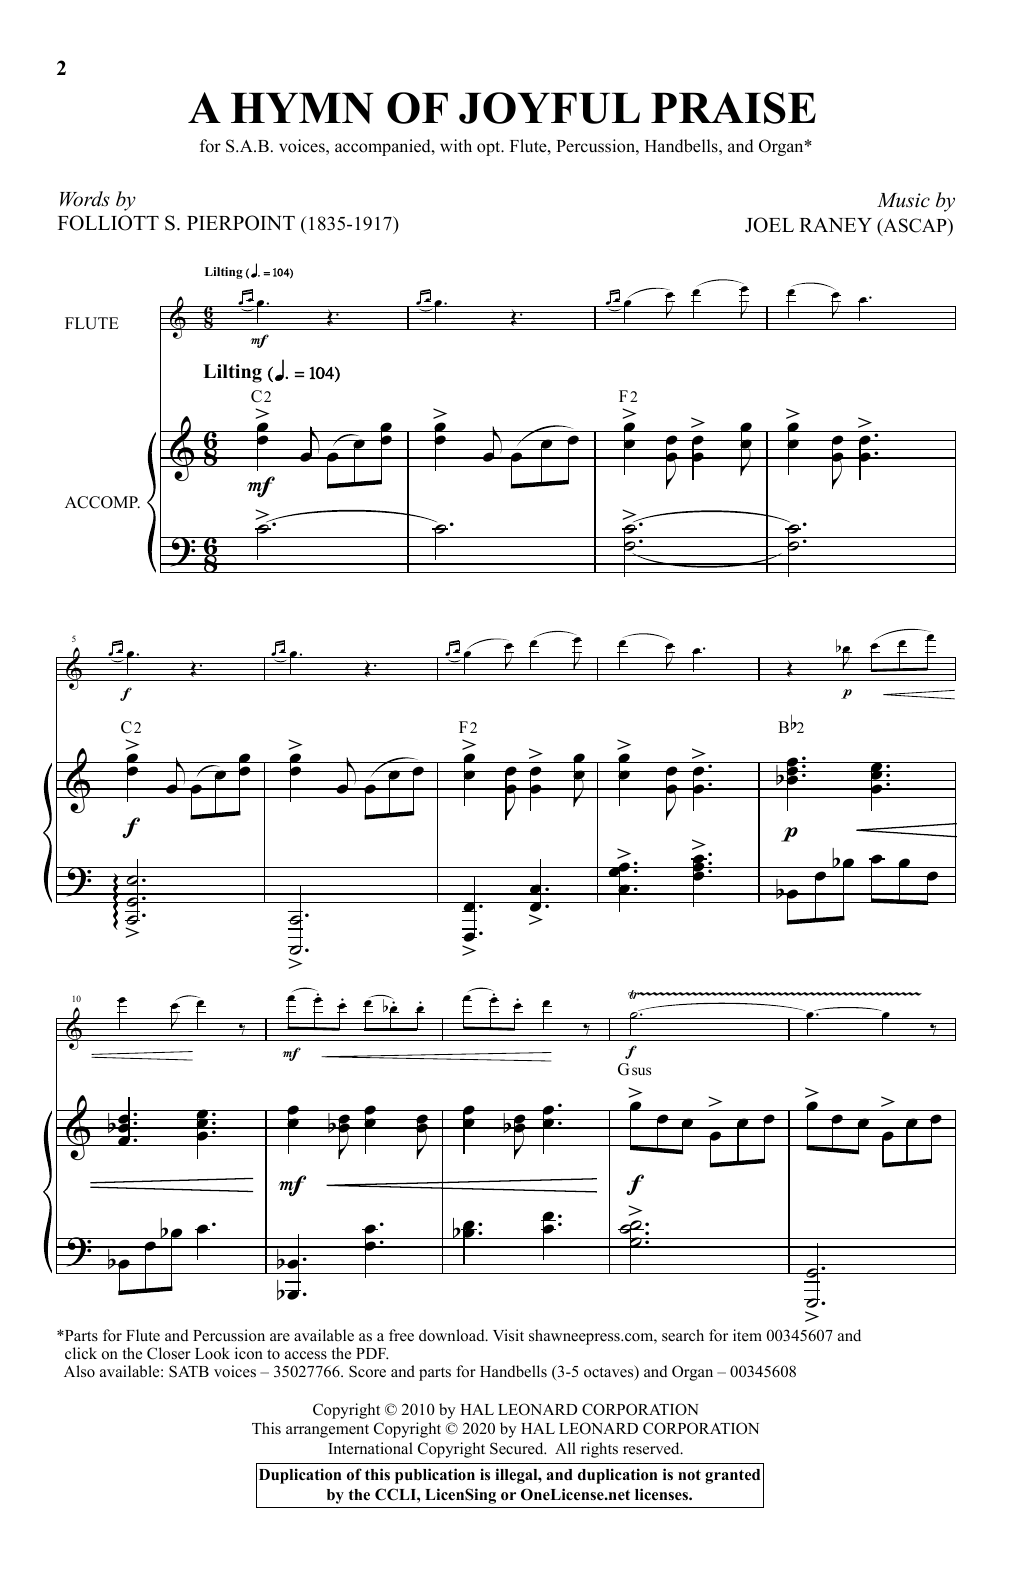 Folliott Pierpoint and Joel Raney A Hymn Of Joyful Praise Sheet Music Notes & Chords for SATB Choir - Download or Print PDF